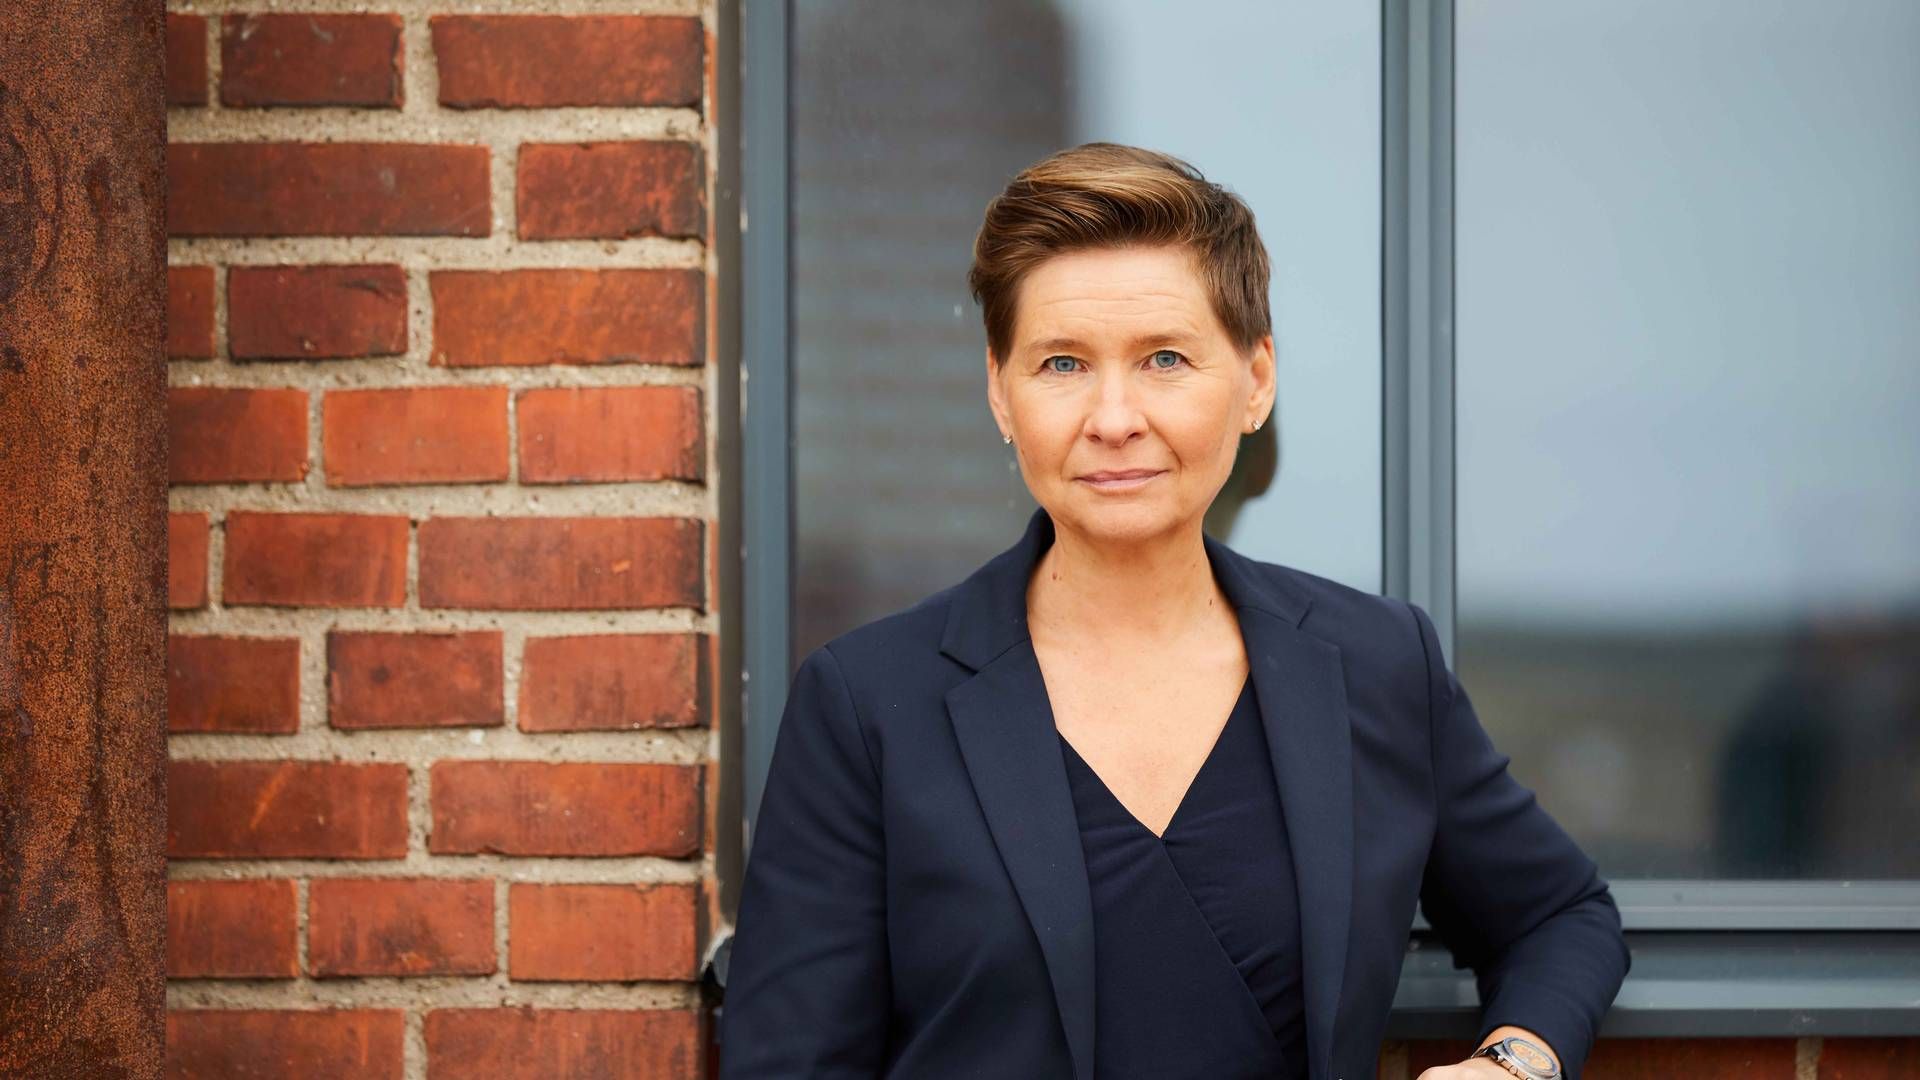 Ulrika Hallengren er adm. direktør i Wihlborgs, som har 18 pct. af sin ejendomsportefølje i Danmark. | Foto: PR / Wihlborgs